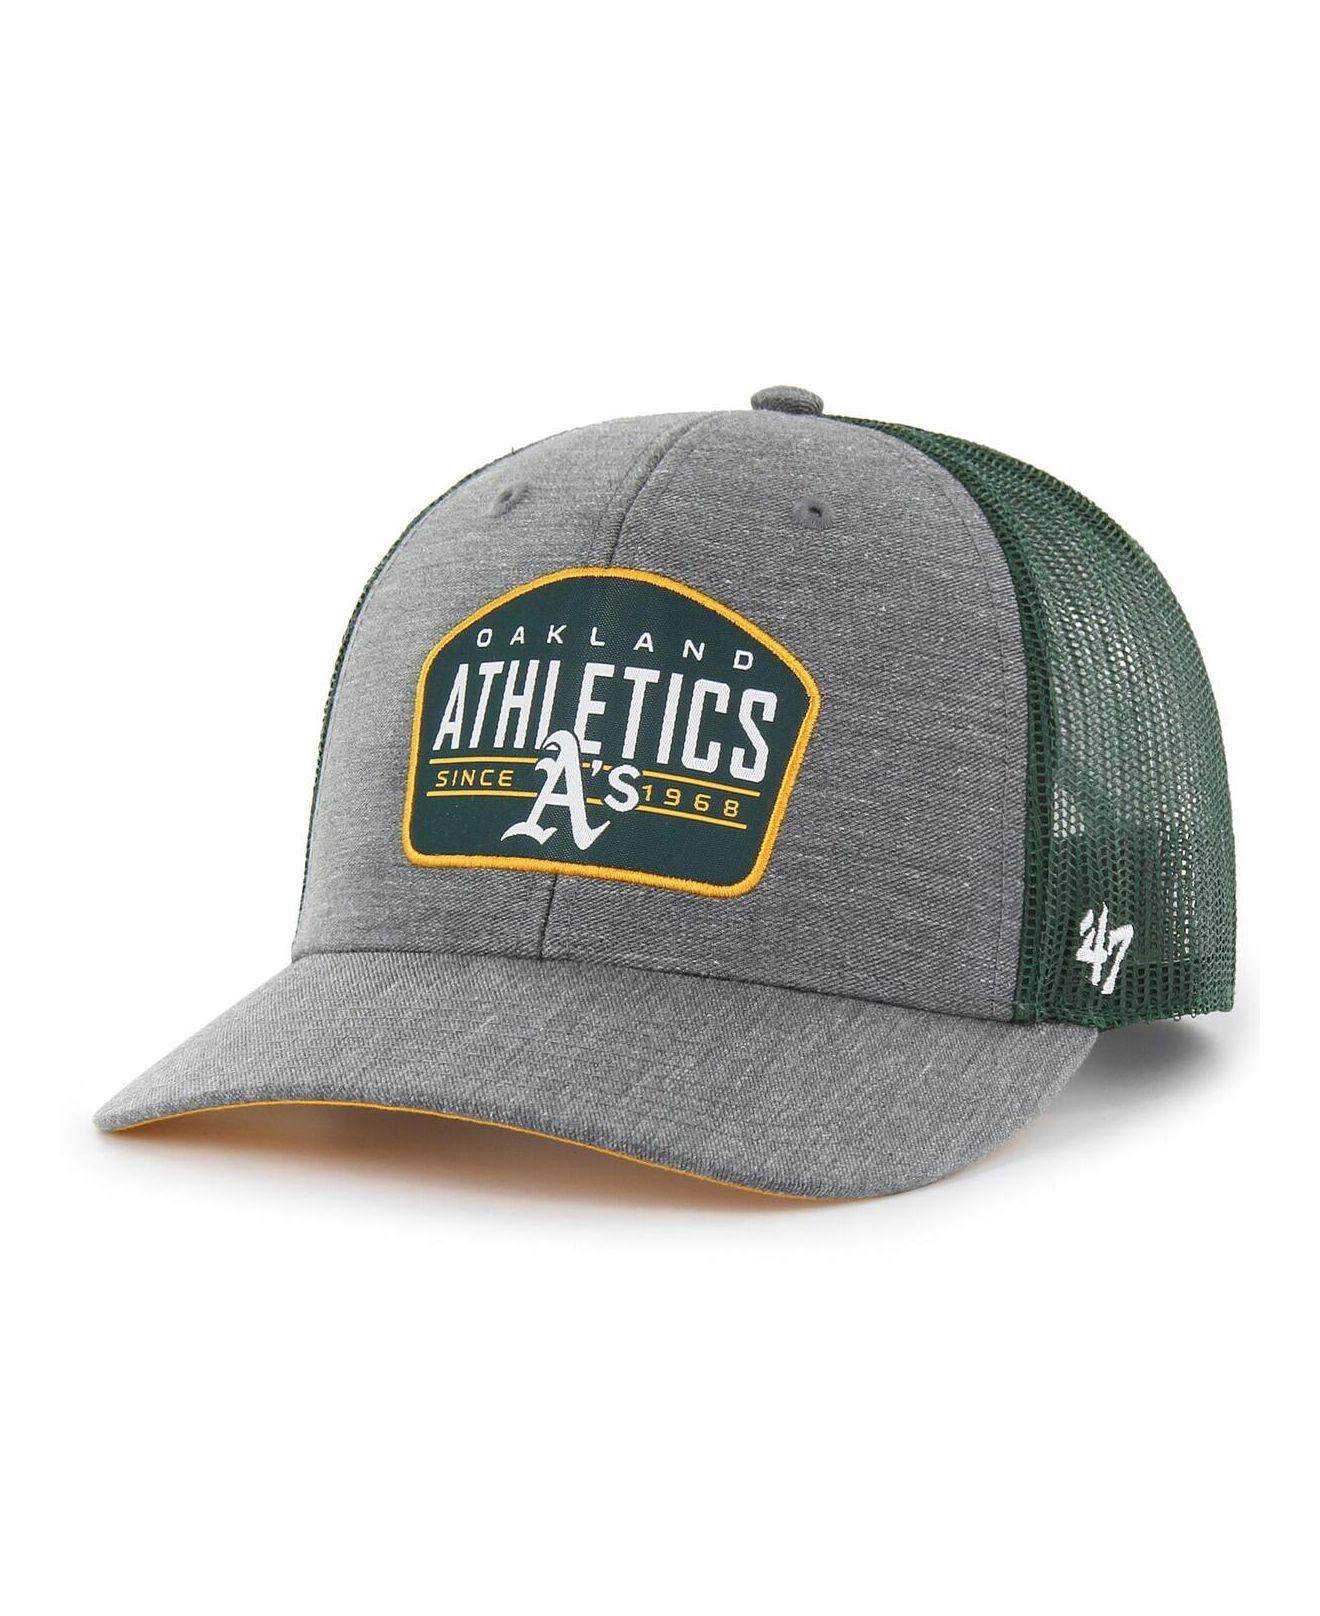 Lids Oakland Athletics '47 Clean Up Adjustable Hat - Green